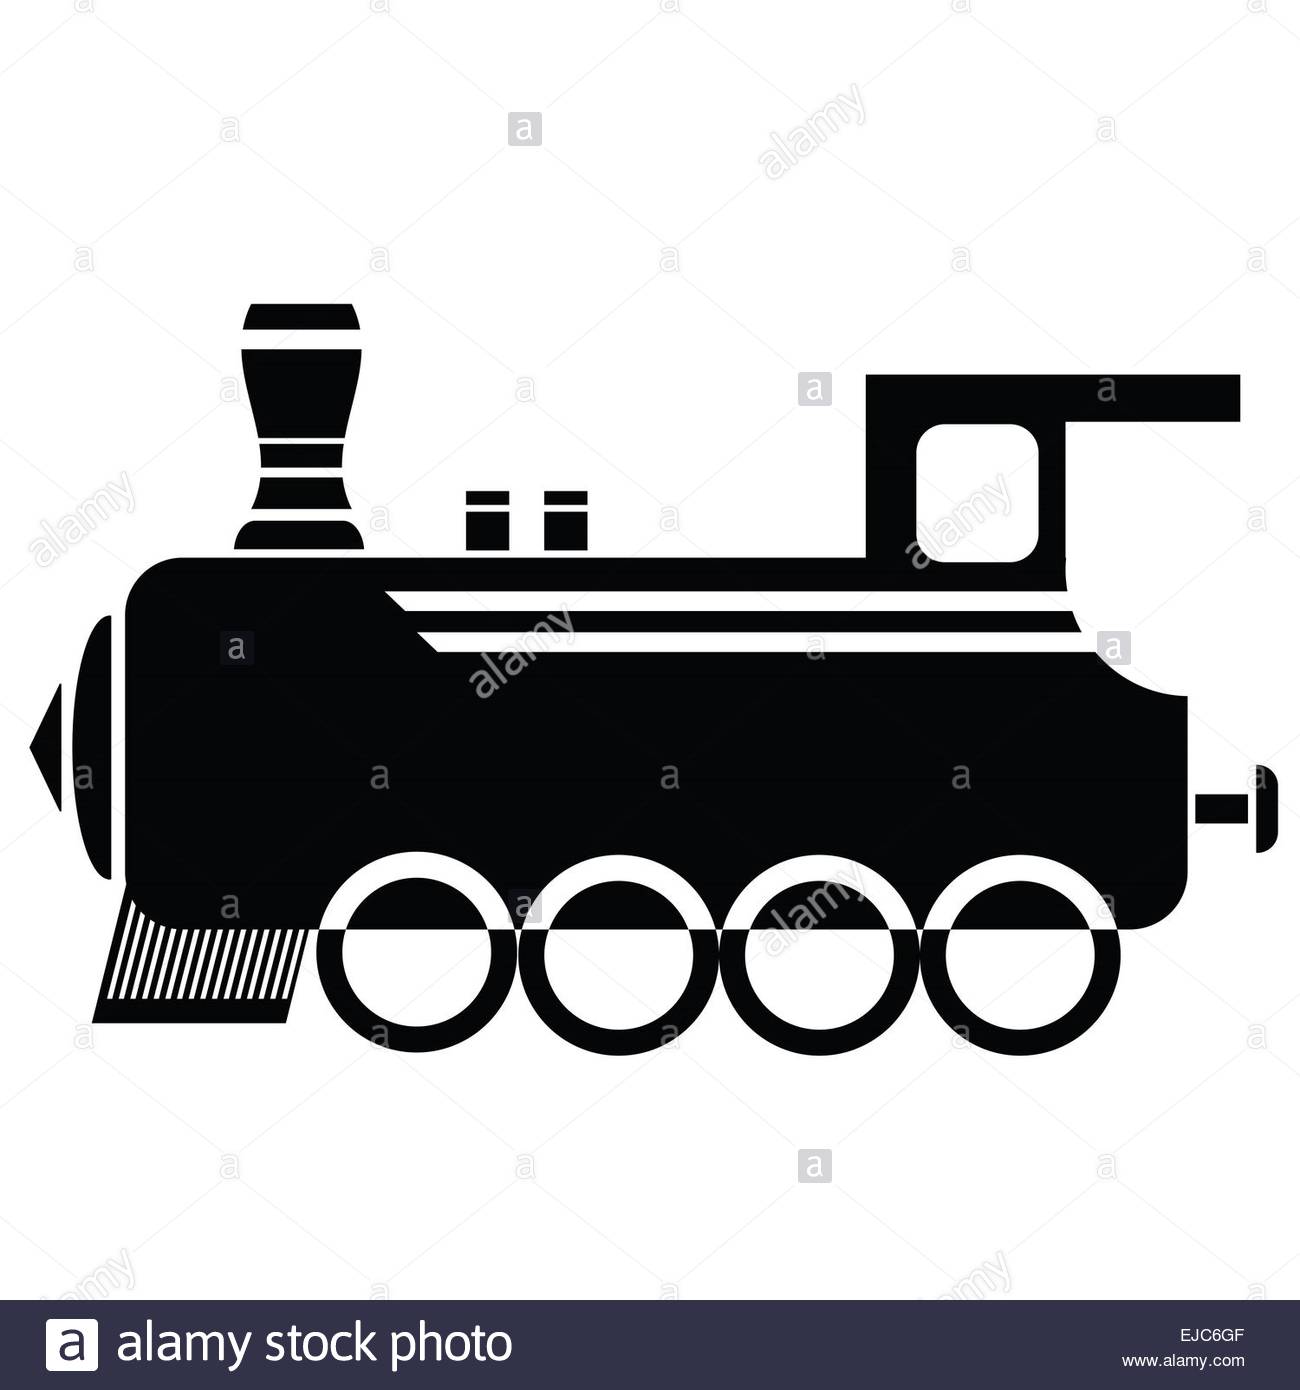 Engine, locomotive, puffer, rail, railroad, railway, train icon 